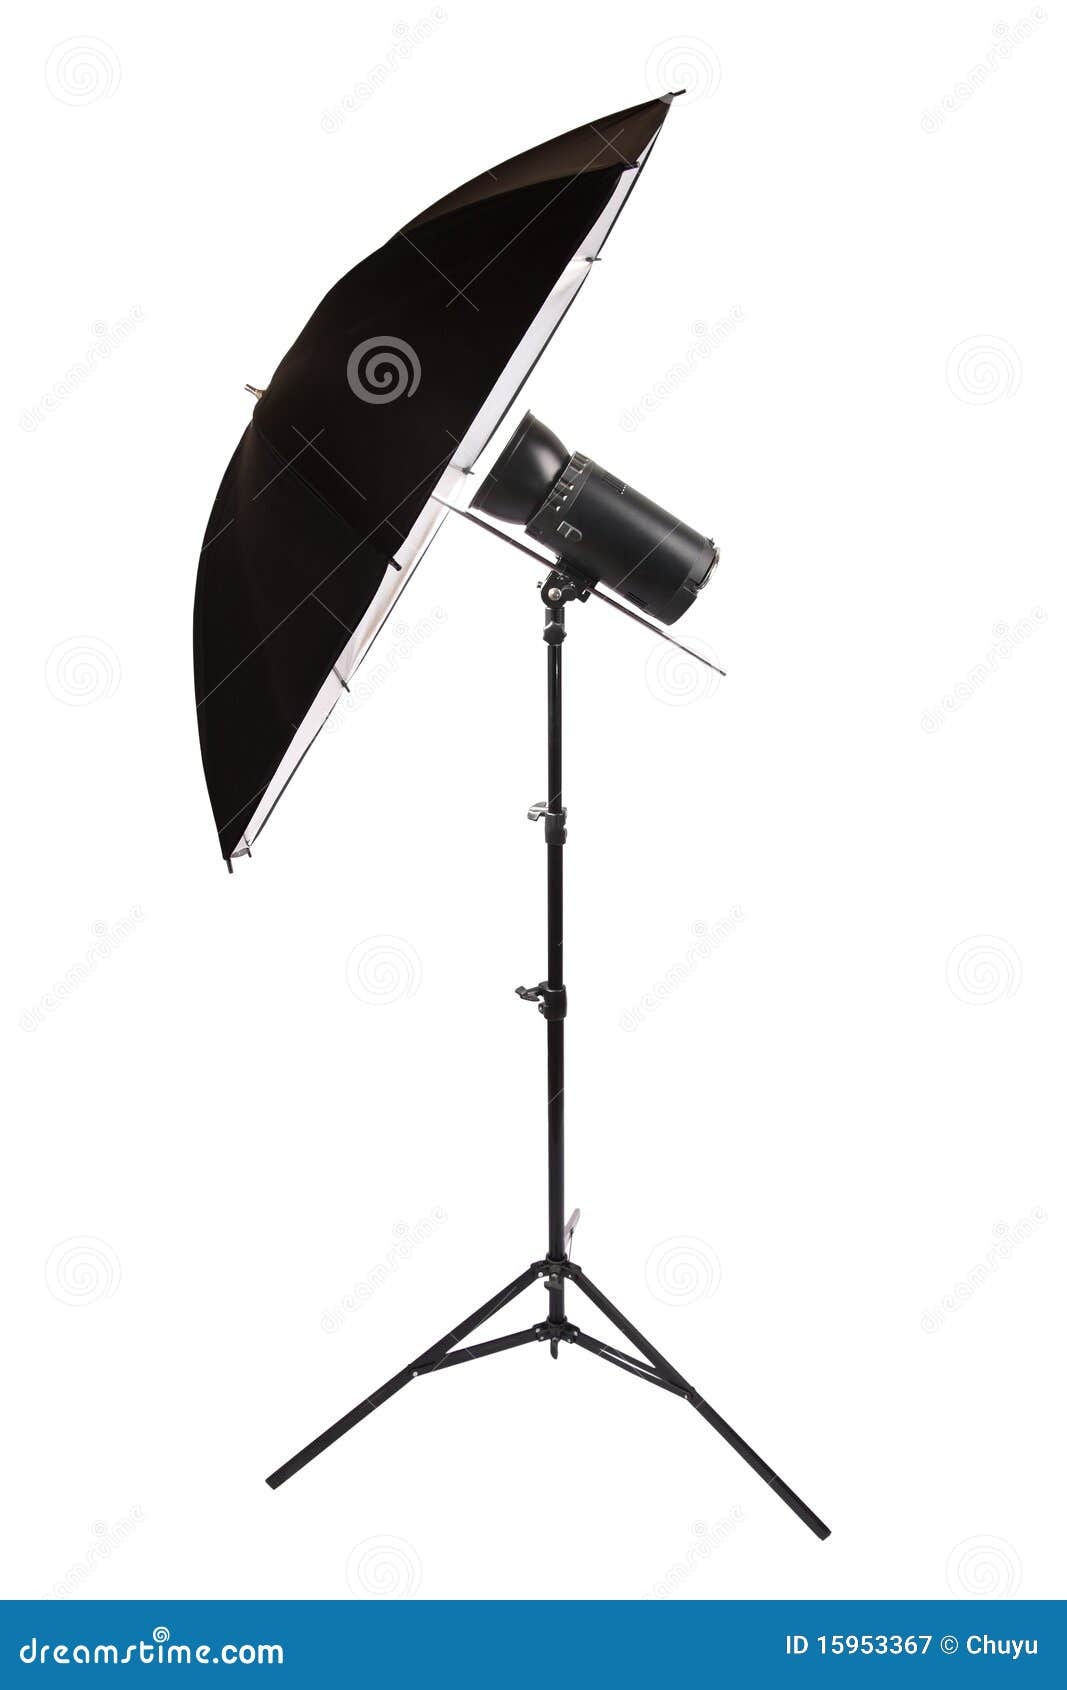 Phot-R 71" 180cm Photo Studio Parabolic Reflective Flash Umbrella Black & Silver 